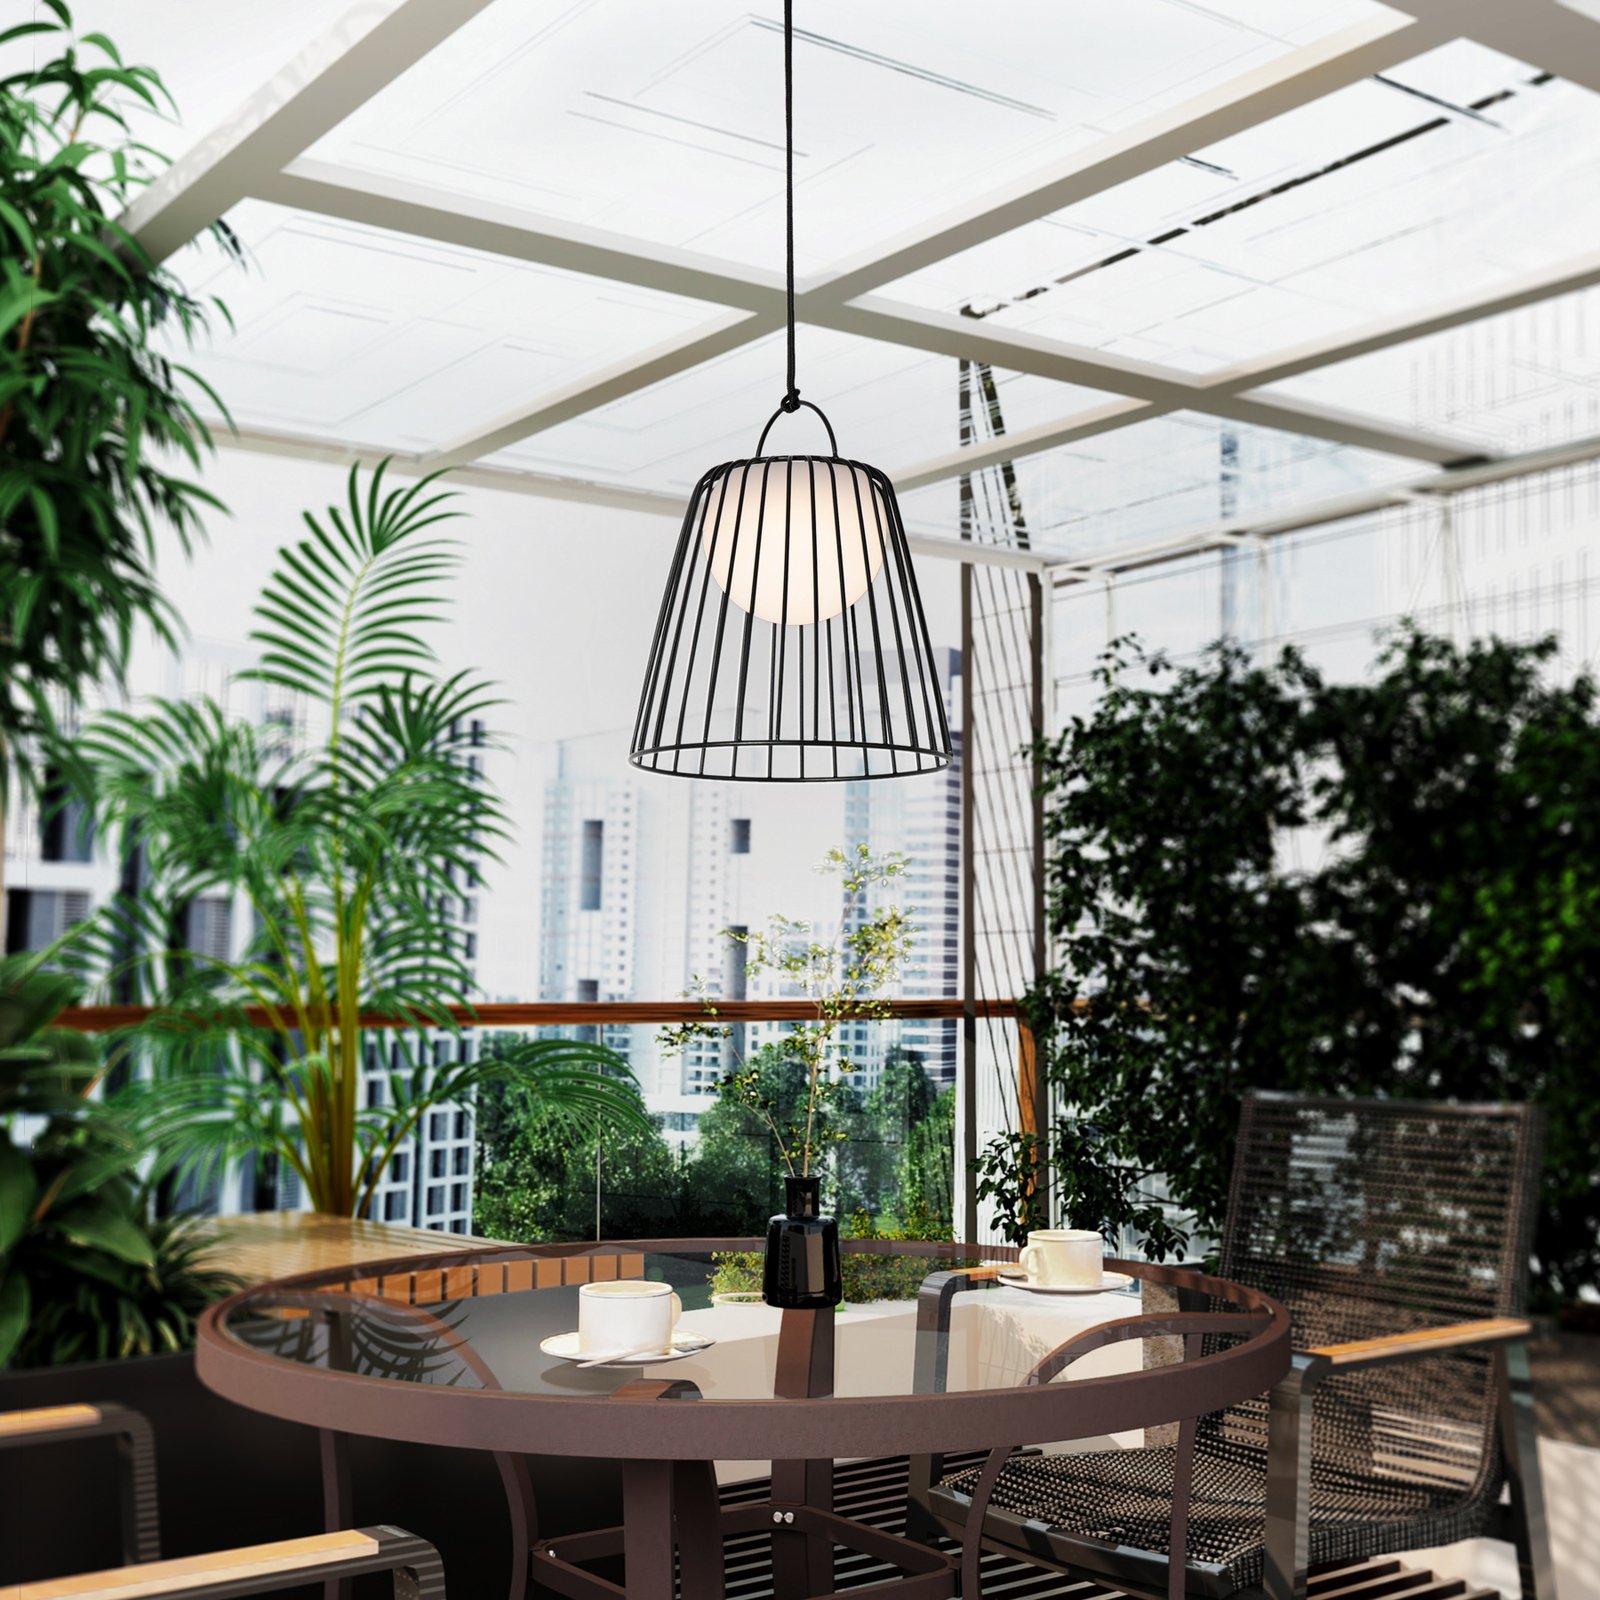 Lindby LED oppladbar utendørs pendellampe Levino, svart, metall